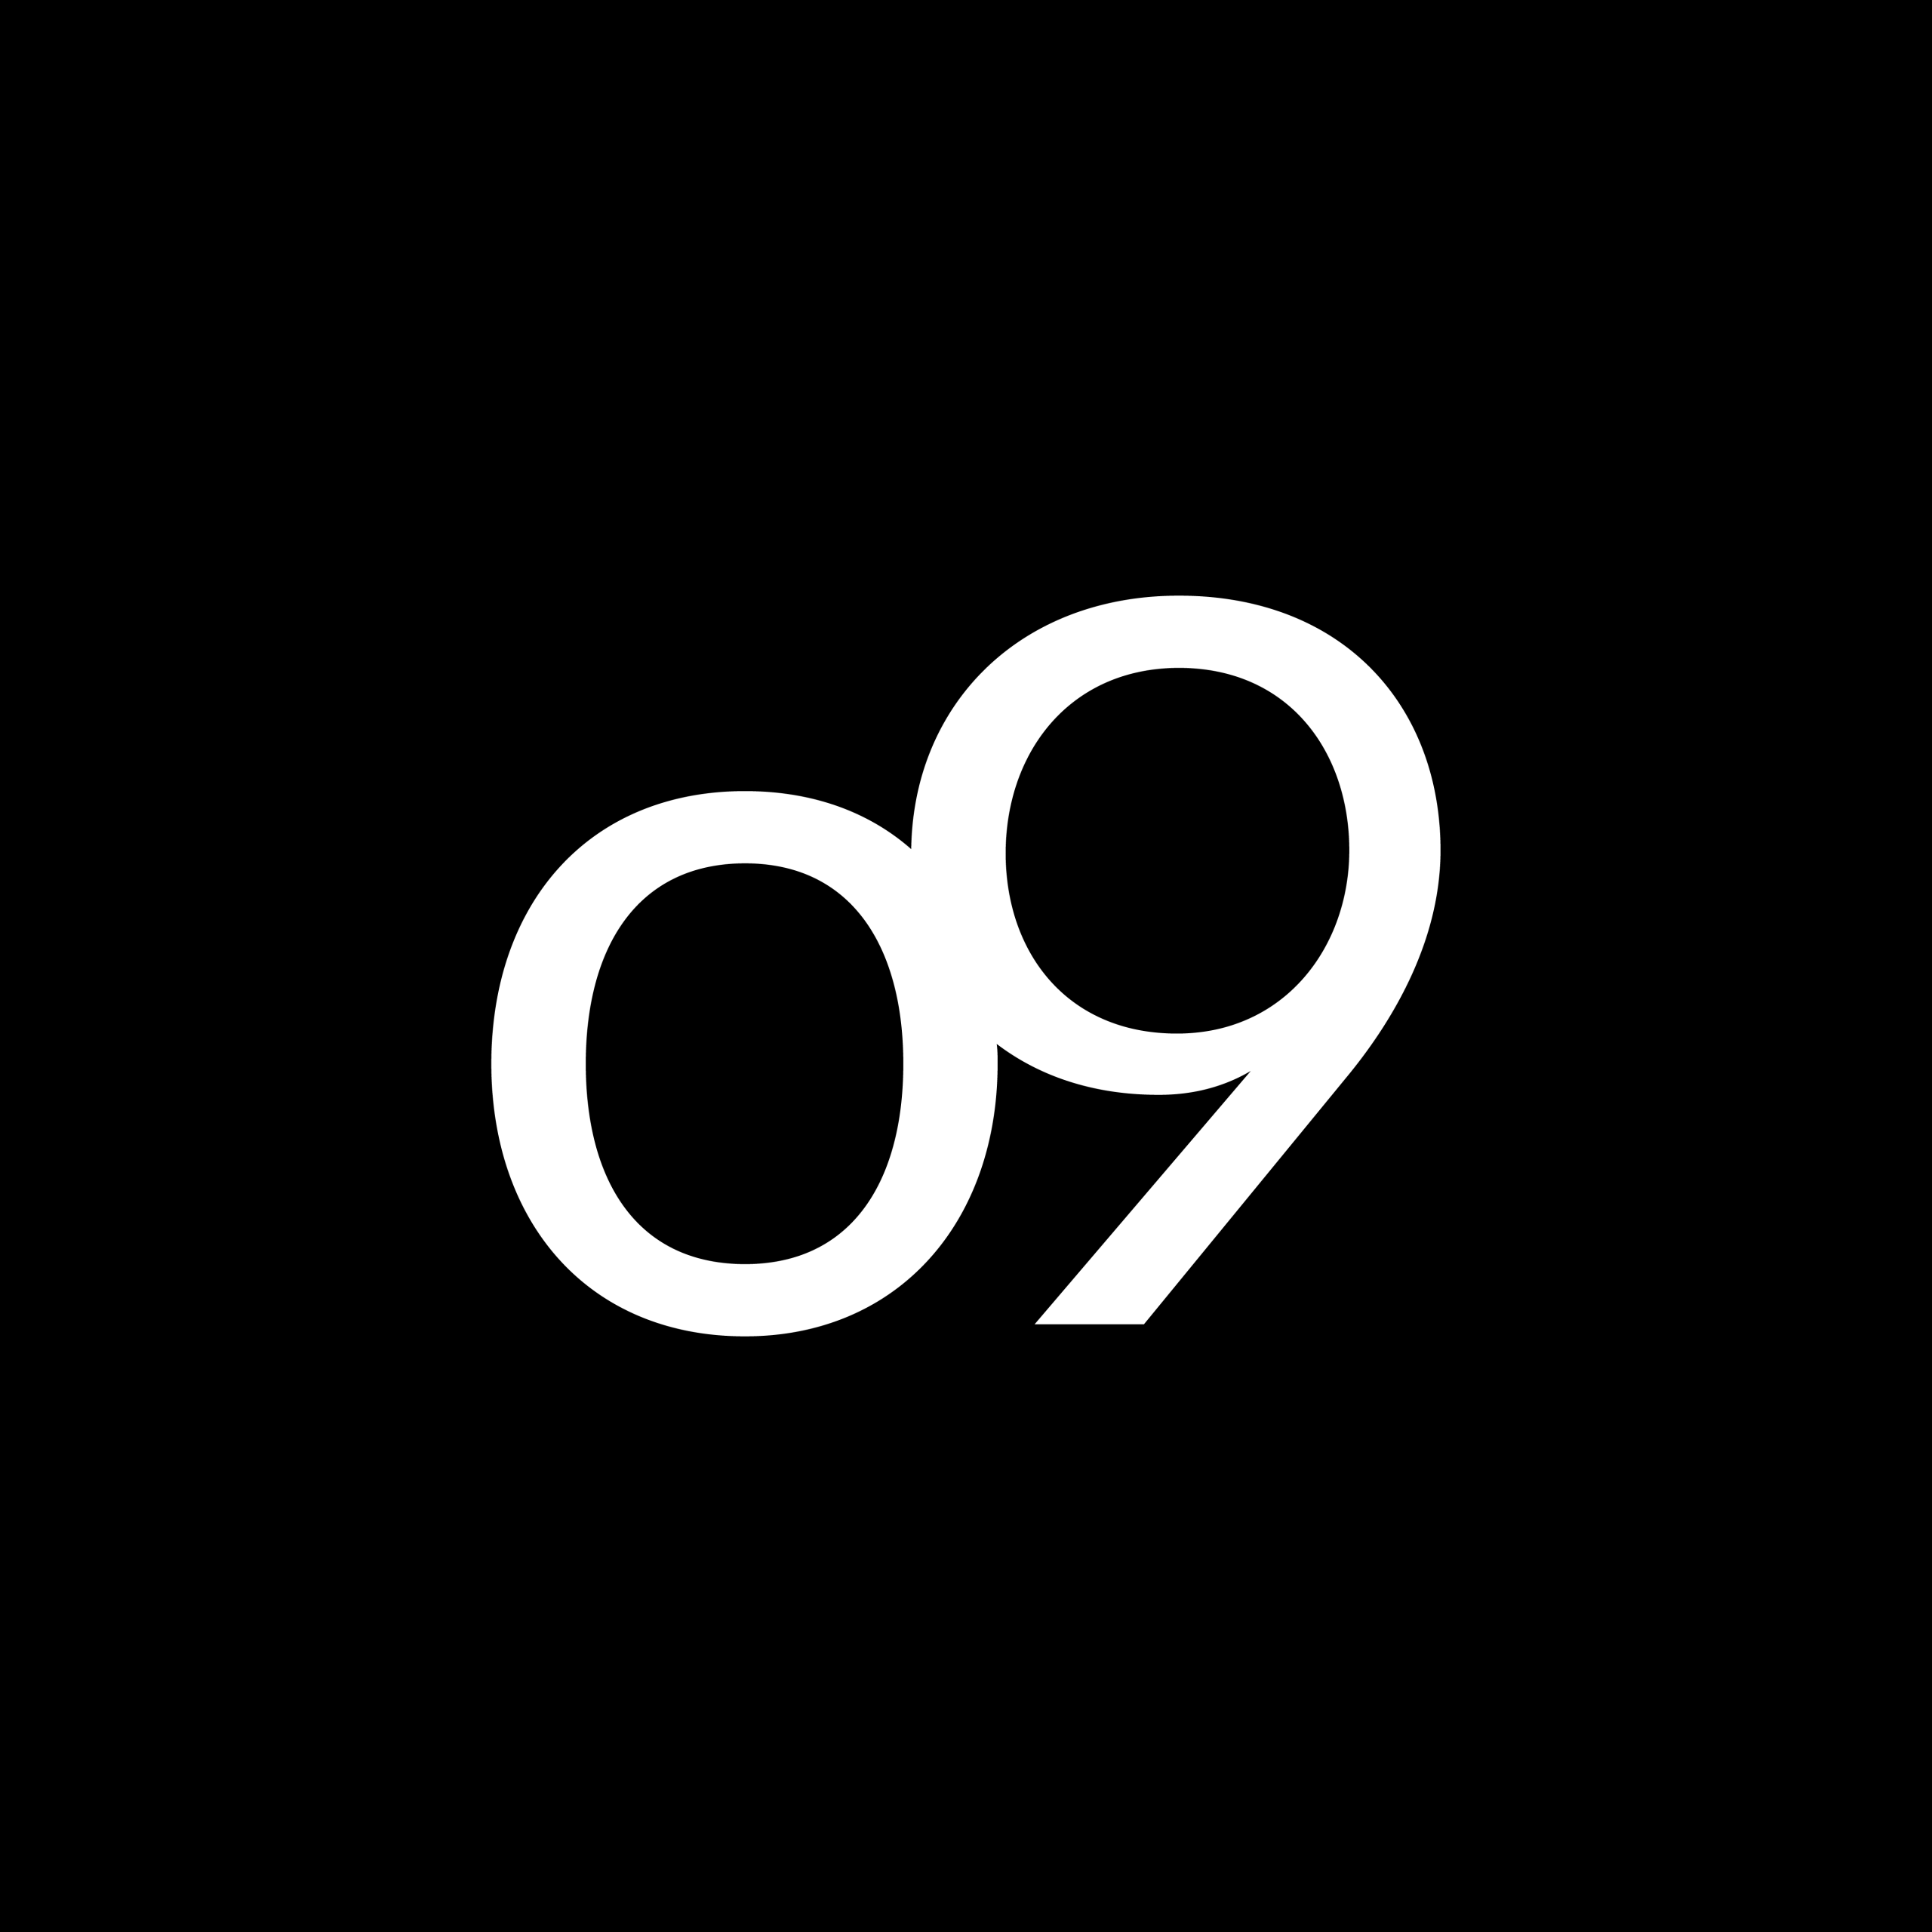 O9 logo black big